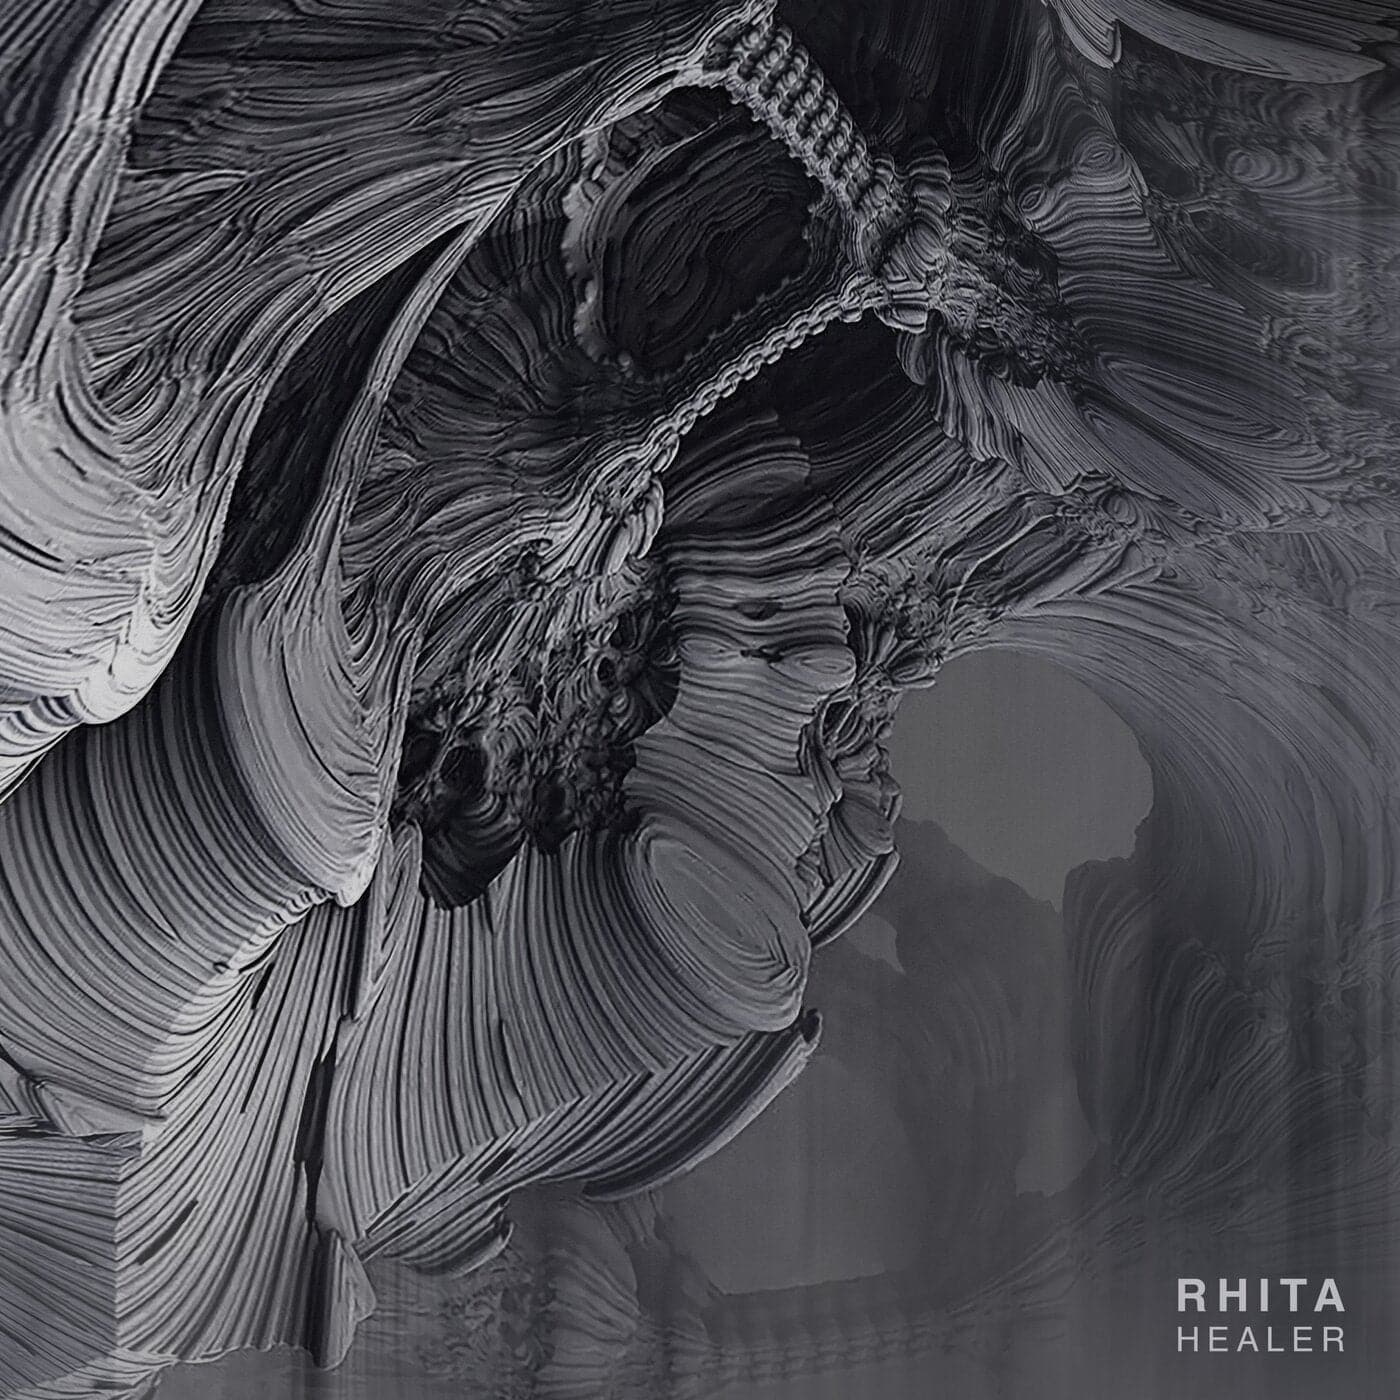 Download Rhita - Healer on Electrobuzz